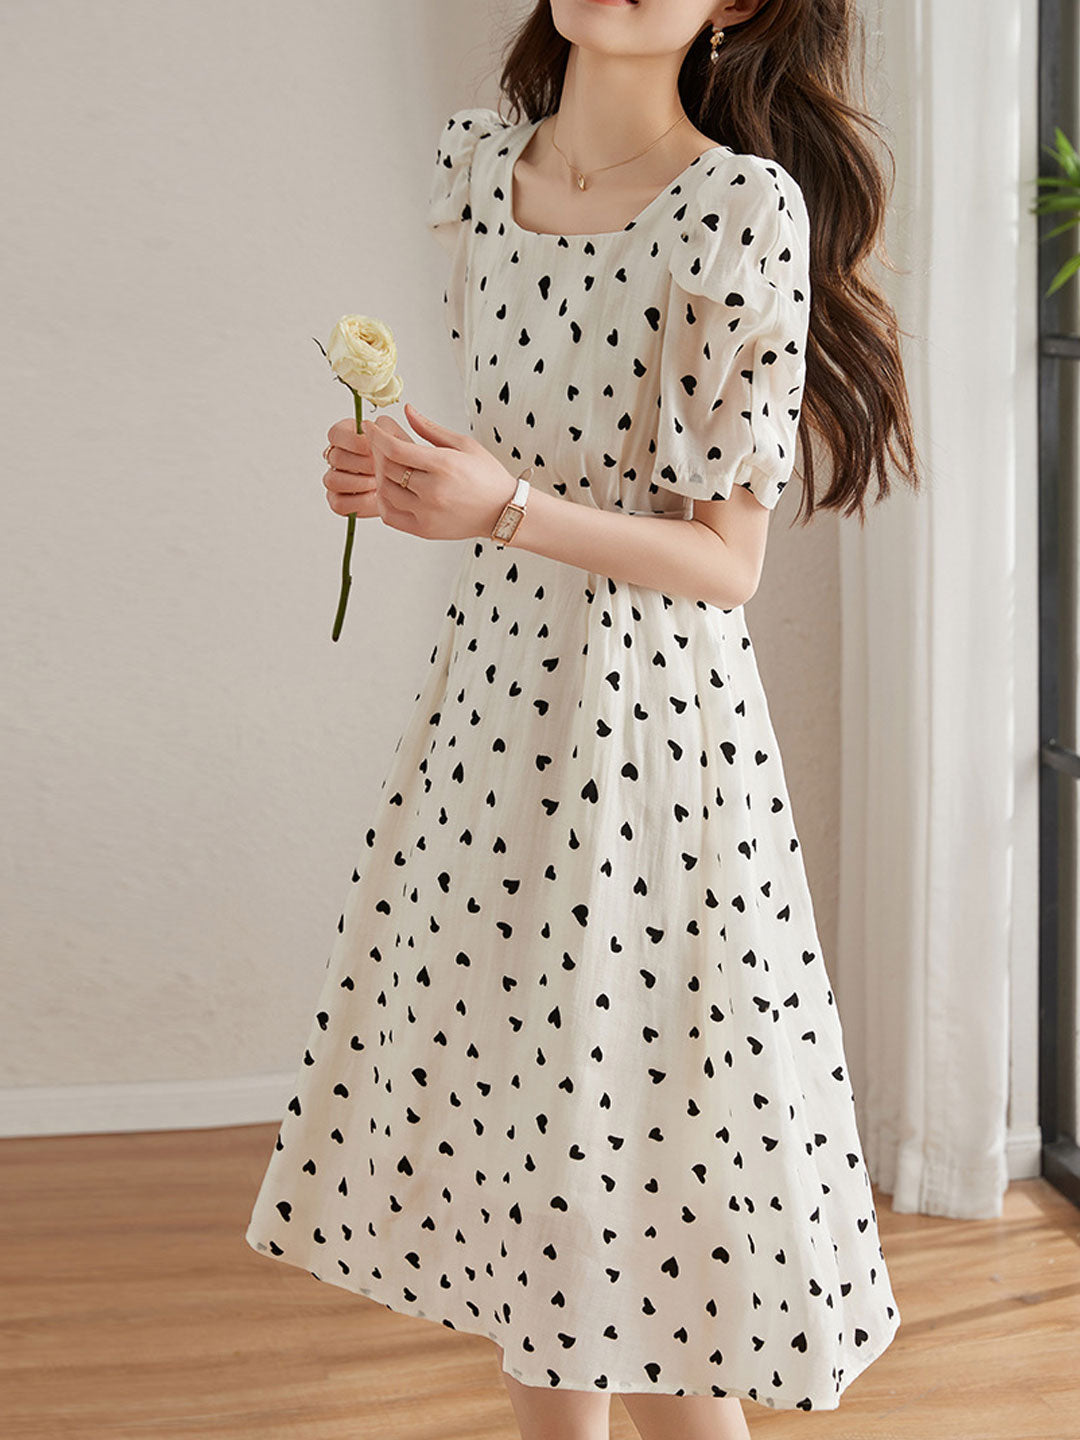 Abigail Retro Printed Polka-dot Dress